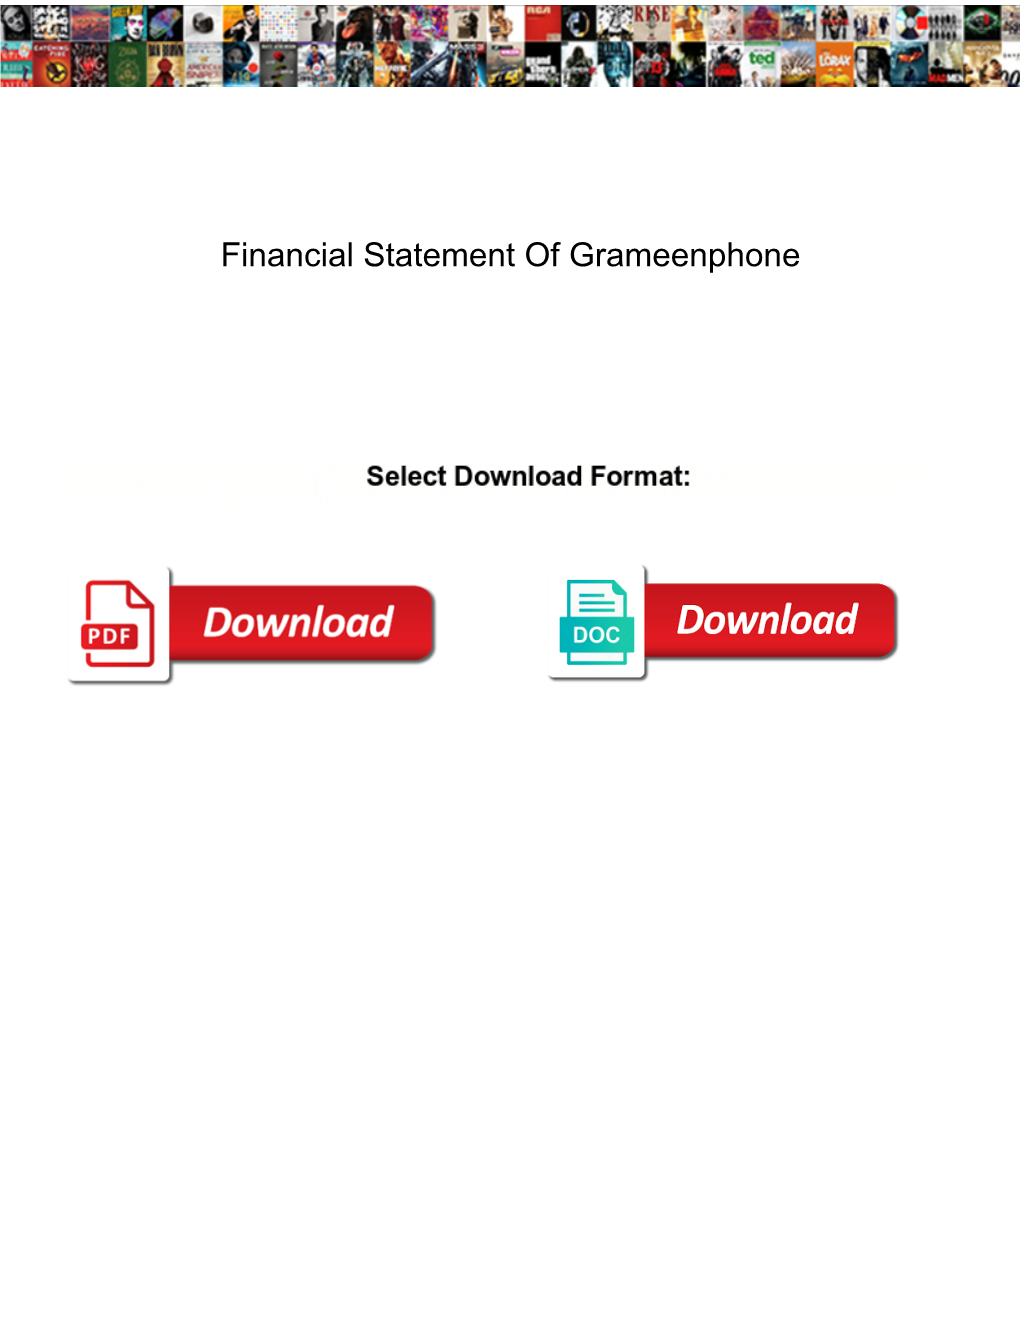 Financial Statement of Grameenphone